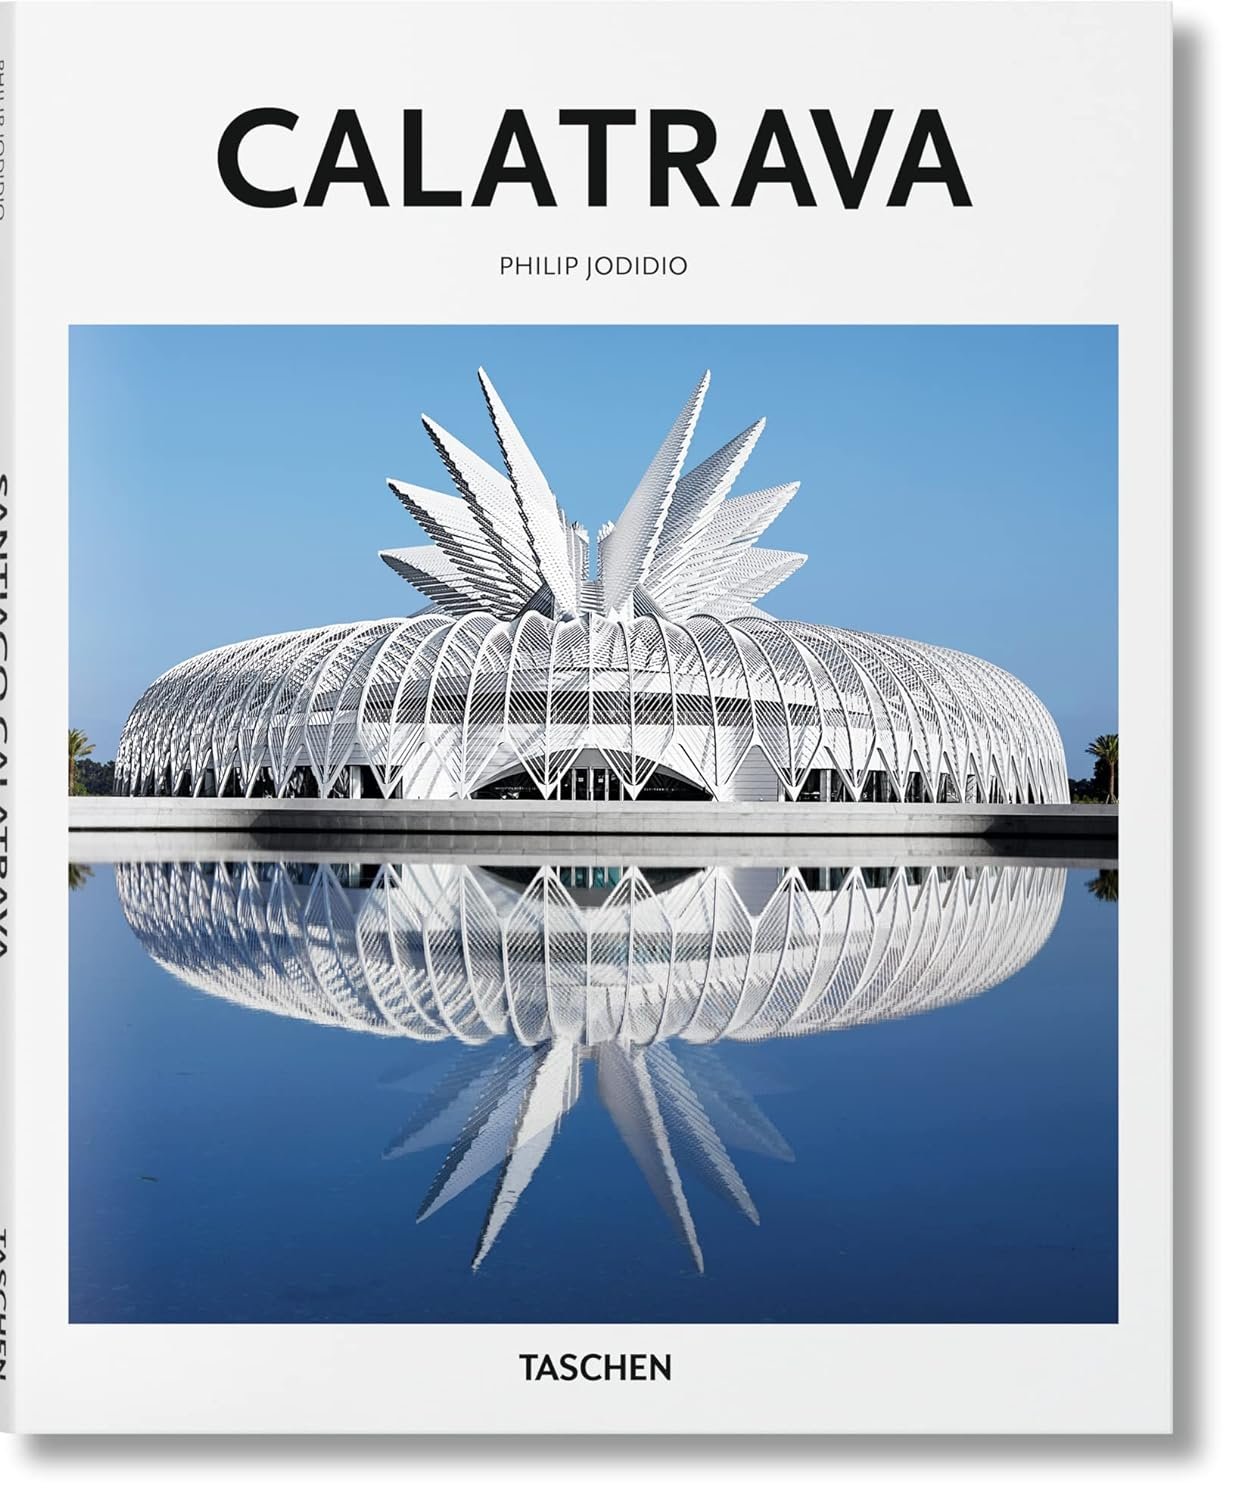 Santiago Calatrava: Architect, Engineer, Artist